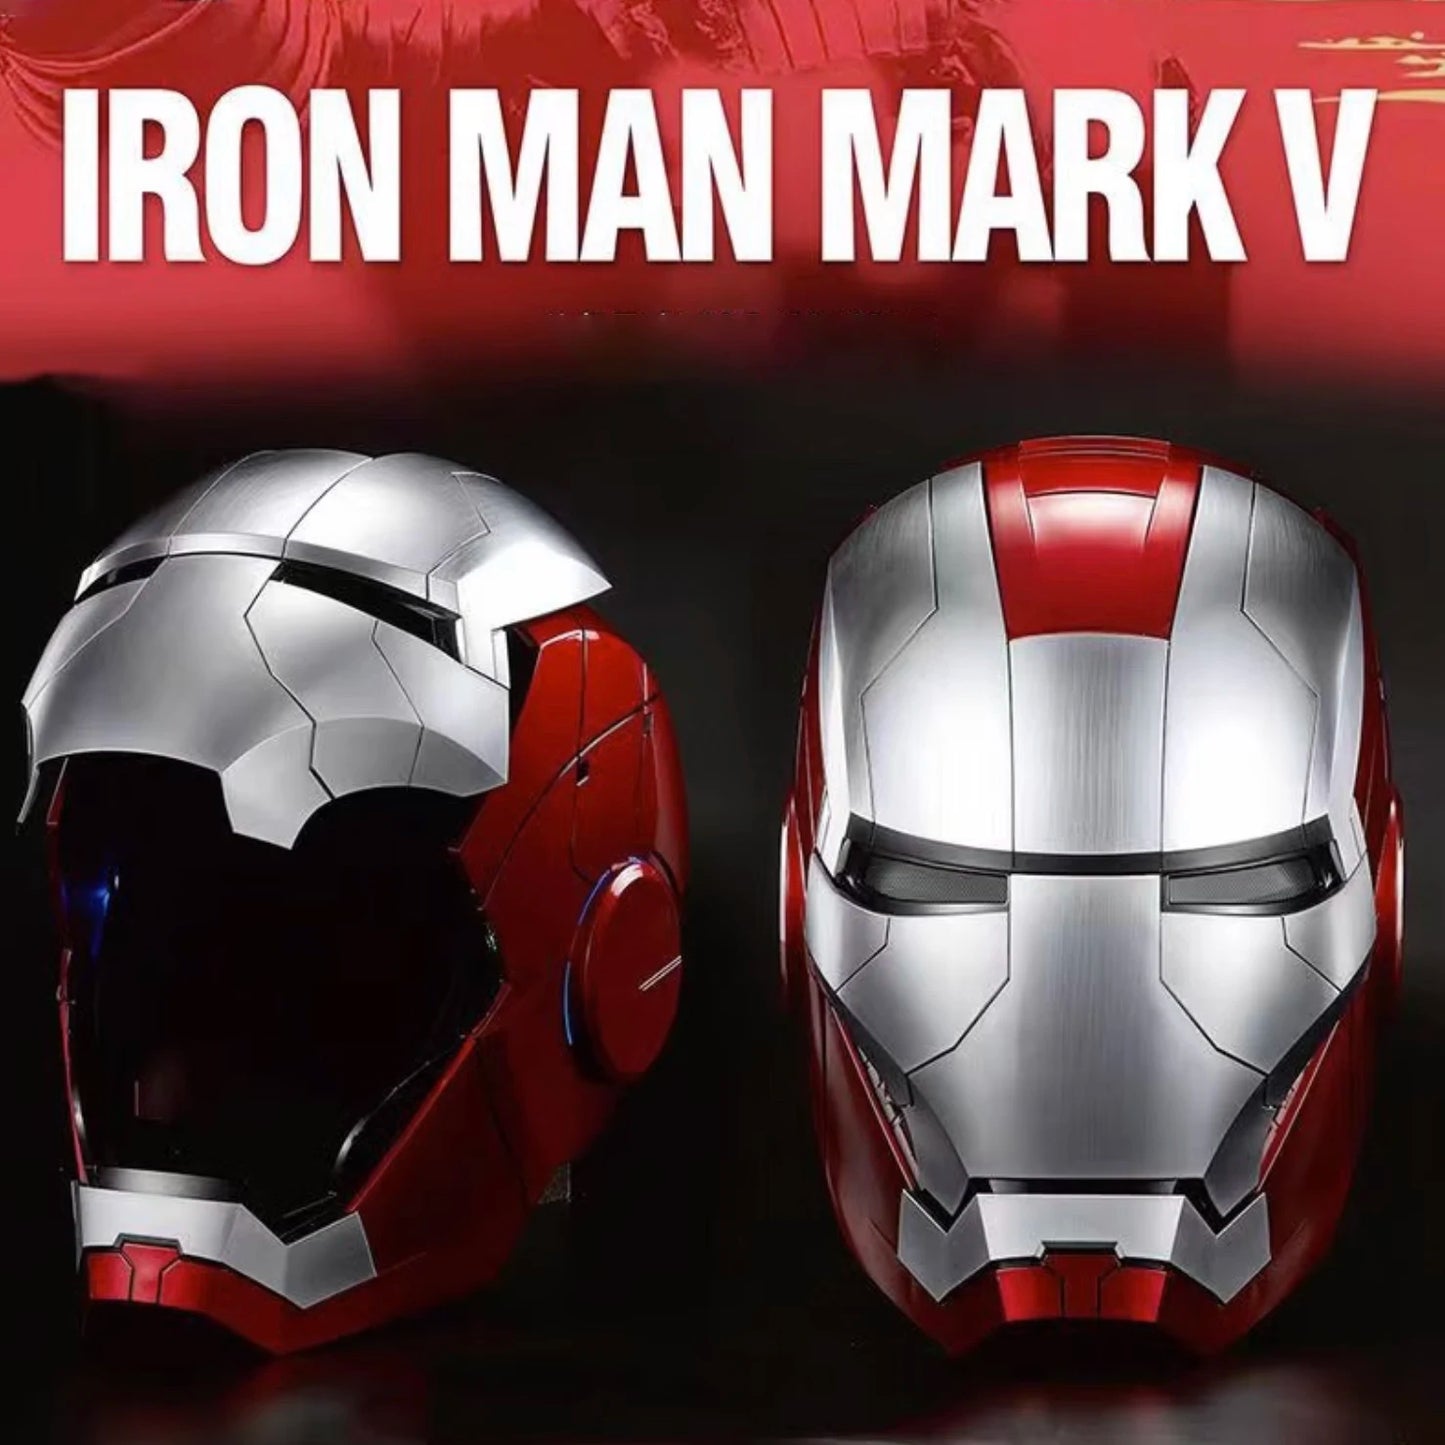 Iron Man Mk5 Helmet 1:1 Voice Control Avengers War Machine Cosplay With Led Light Electronic Close Ironman Helmet Kids Gift